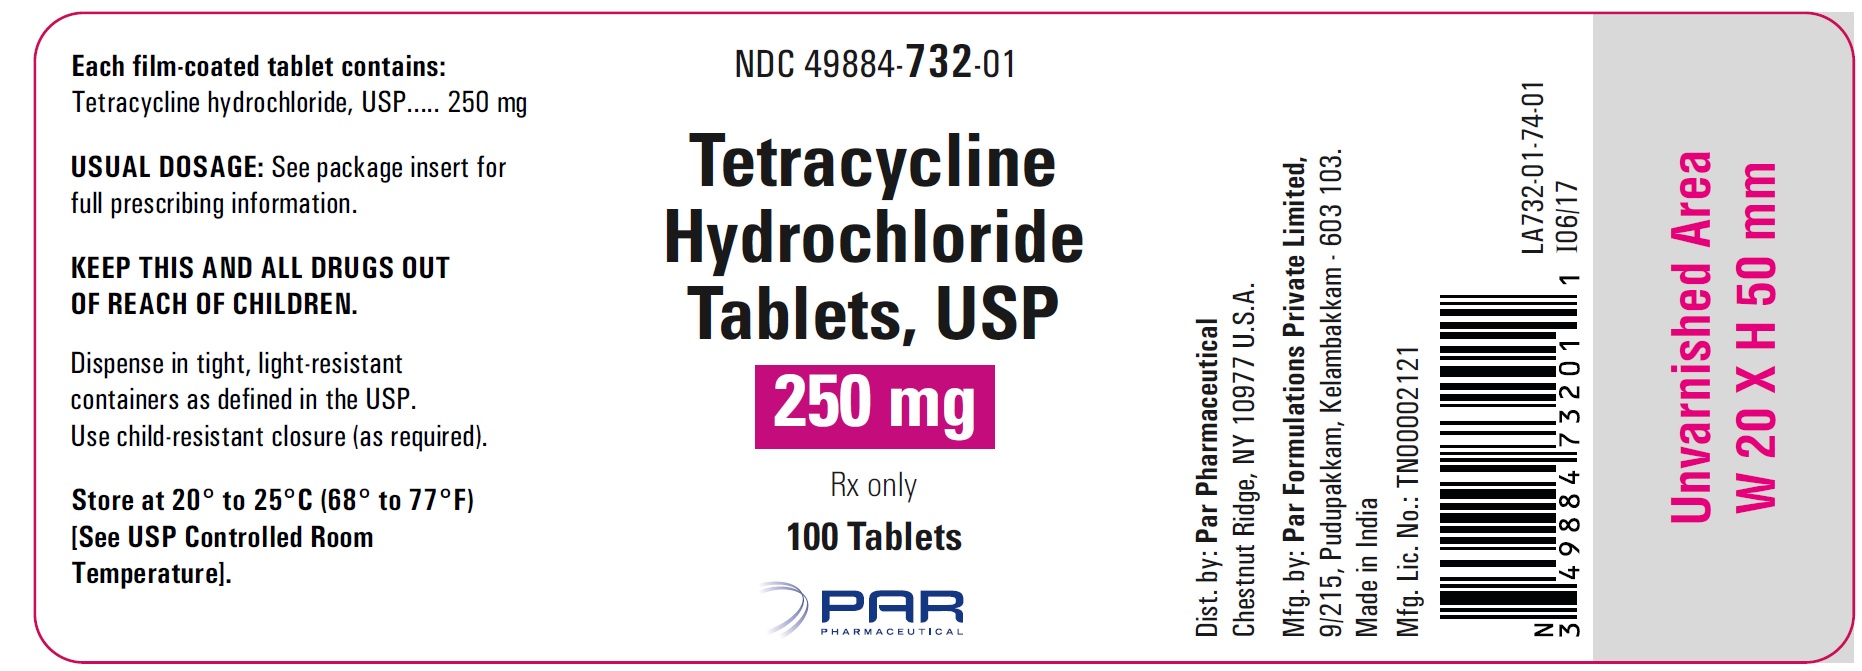 tetracycline-hydrochloride-2.jpg